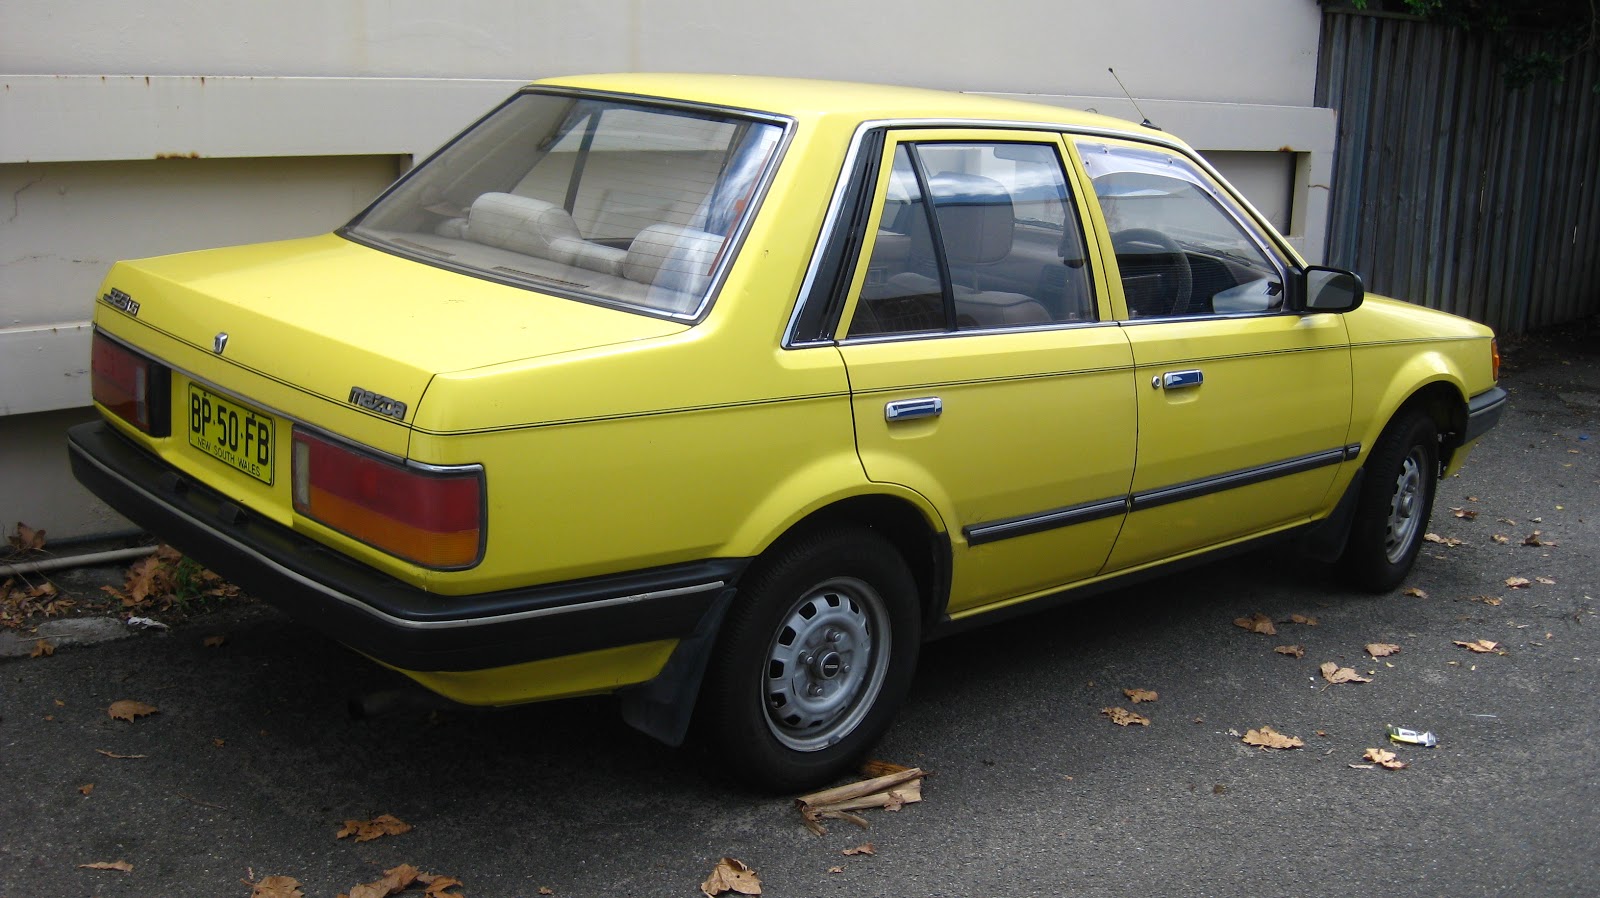 Aussie Old Parked Cars 1986 Mazda BF 323 1.6 Sedan